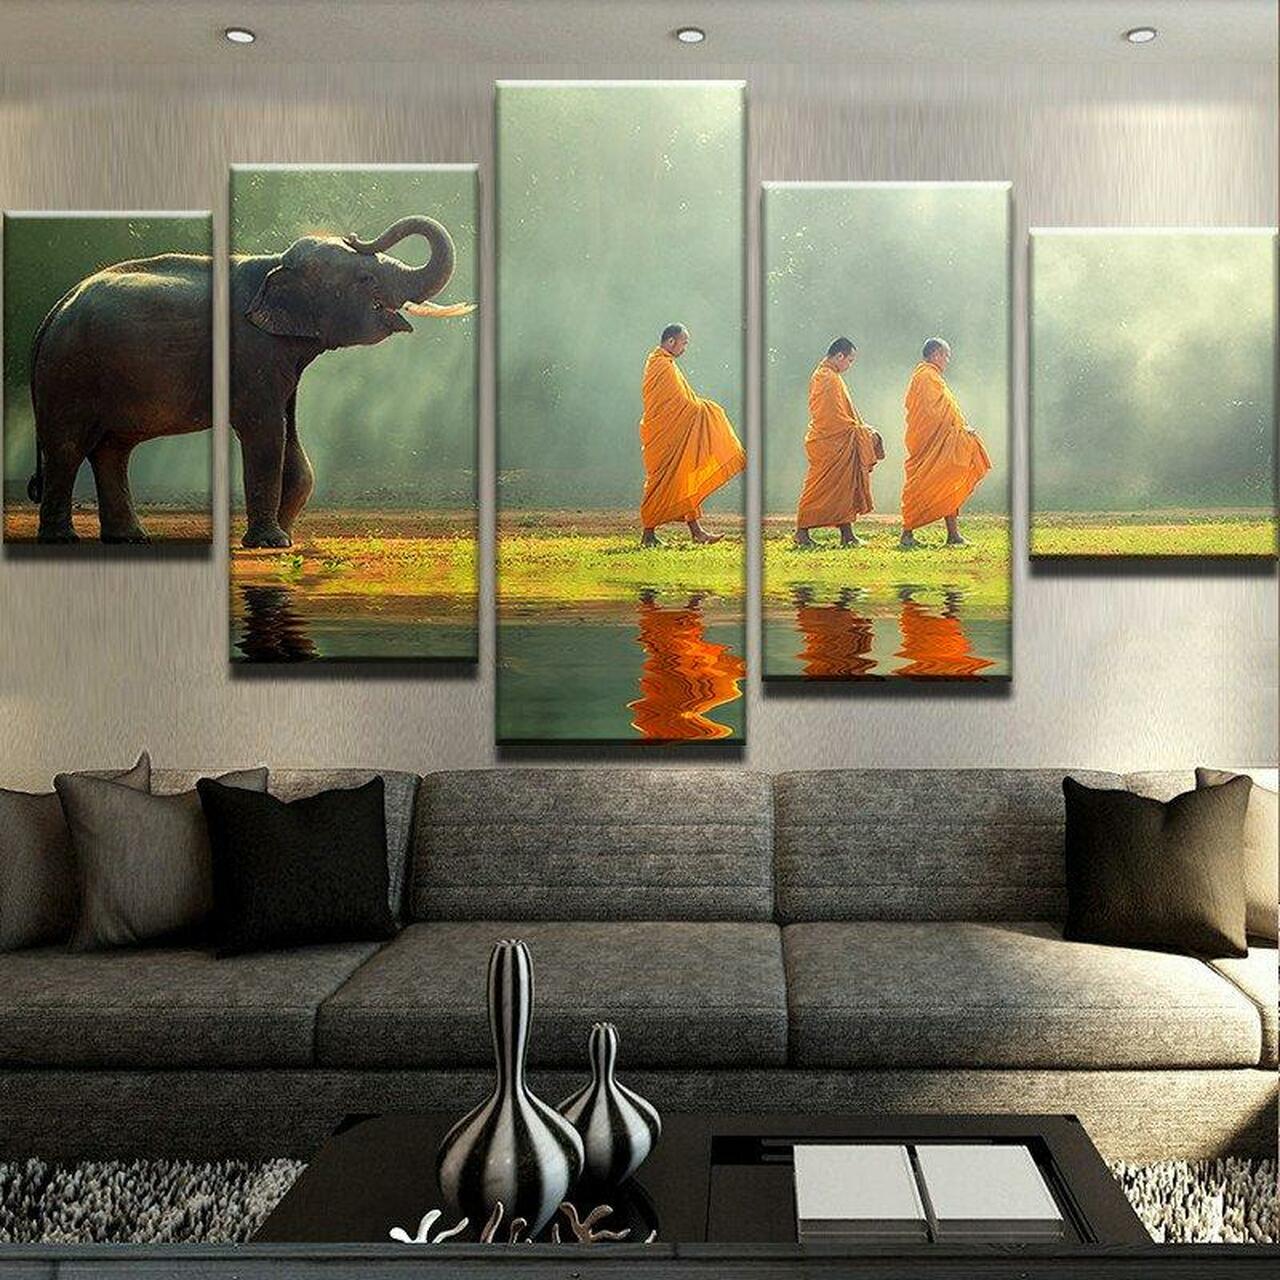 Elephant and Monks 5 Piece Canvas Art Wall Decor